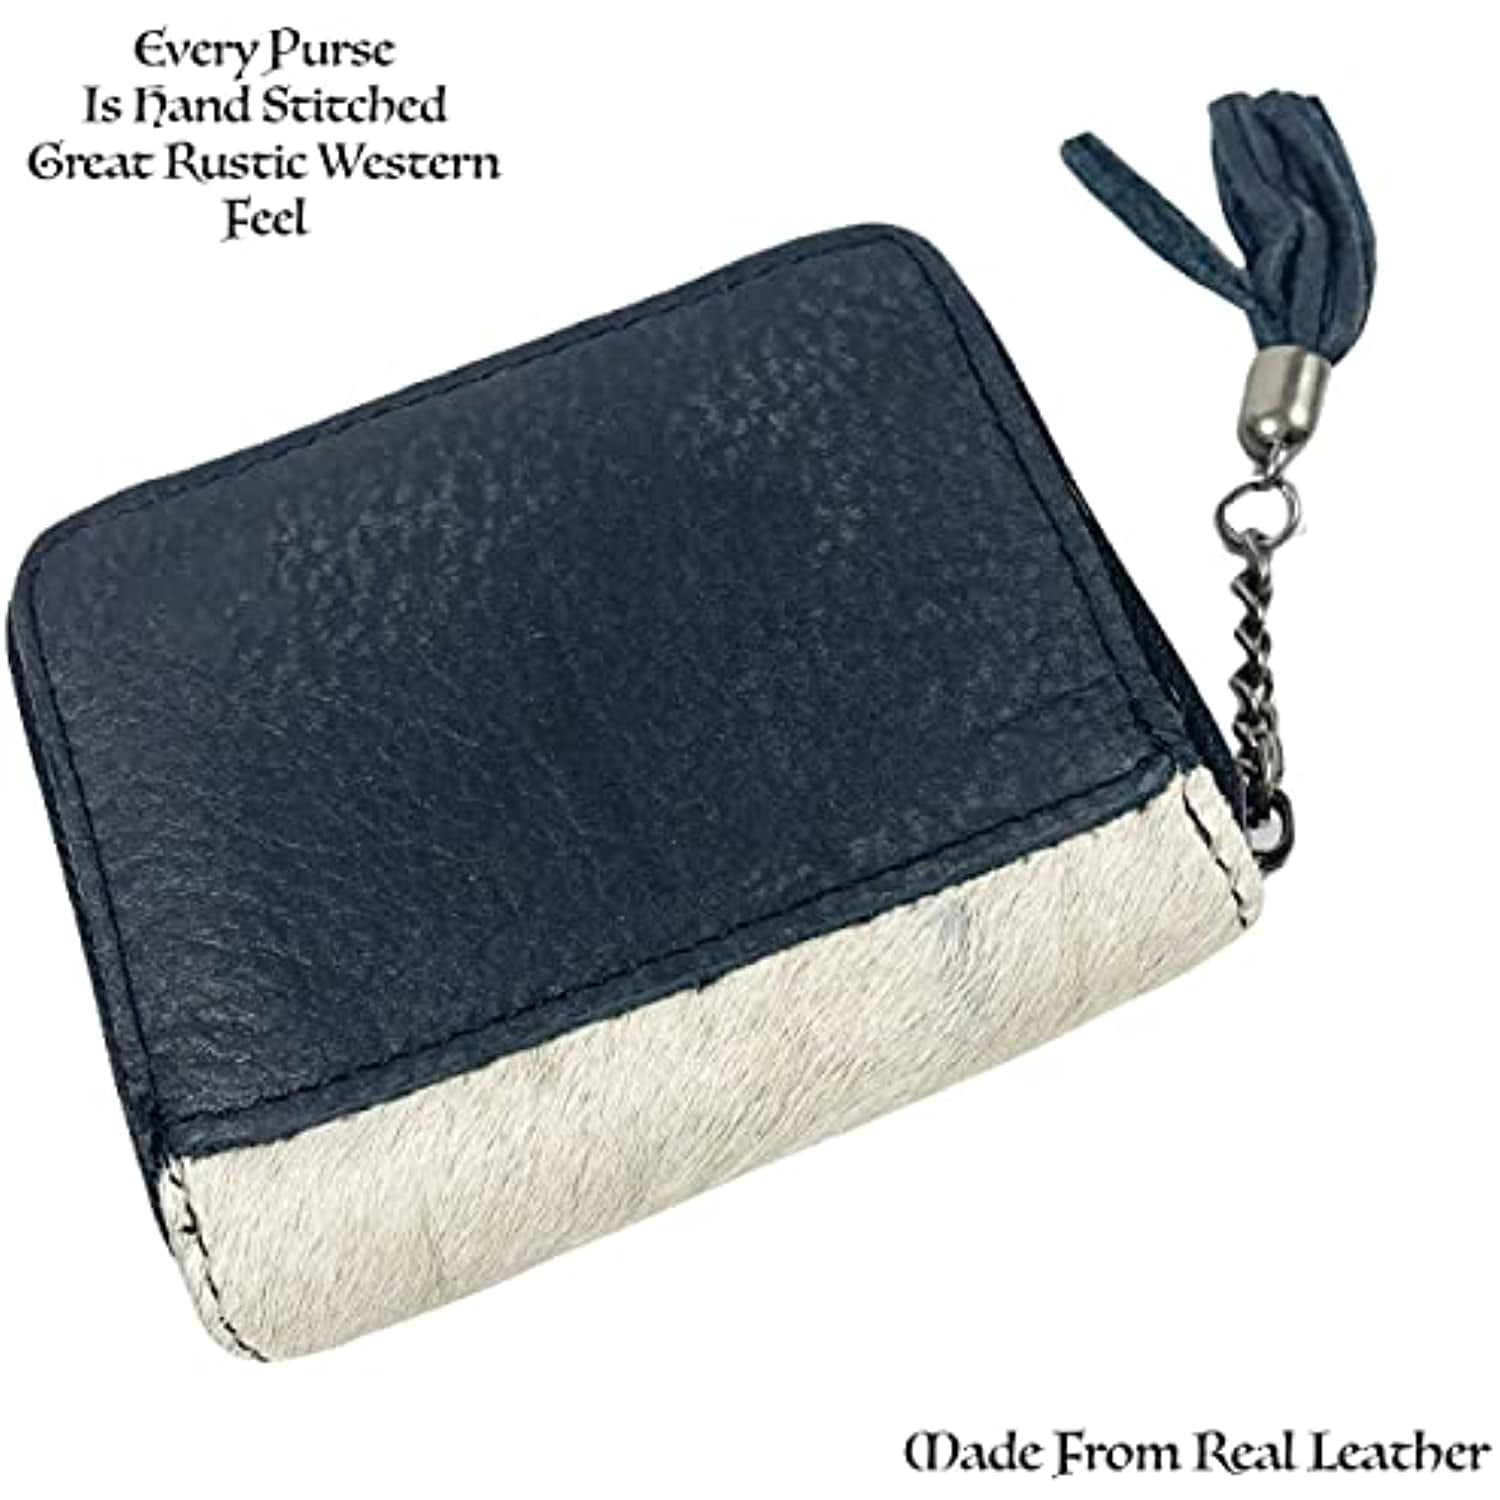 TOPSHOP WOMENS REAL Leather mini Purse Bag - Gold (Ba10) £5.99 - PicClick UK